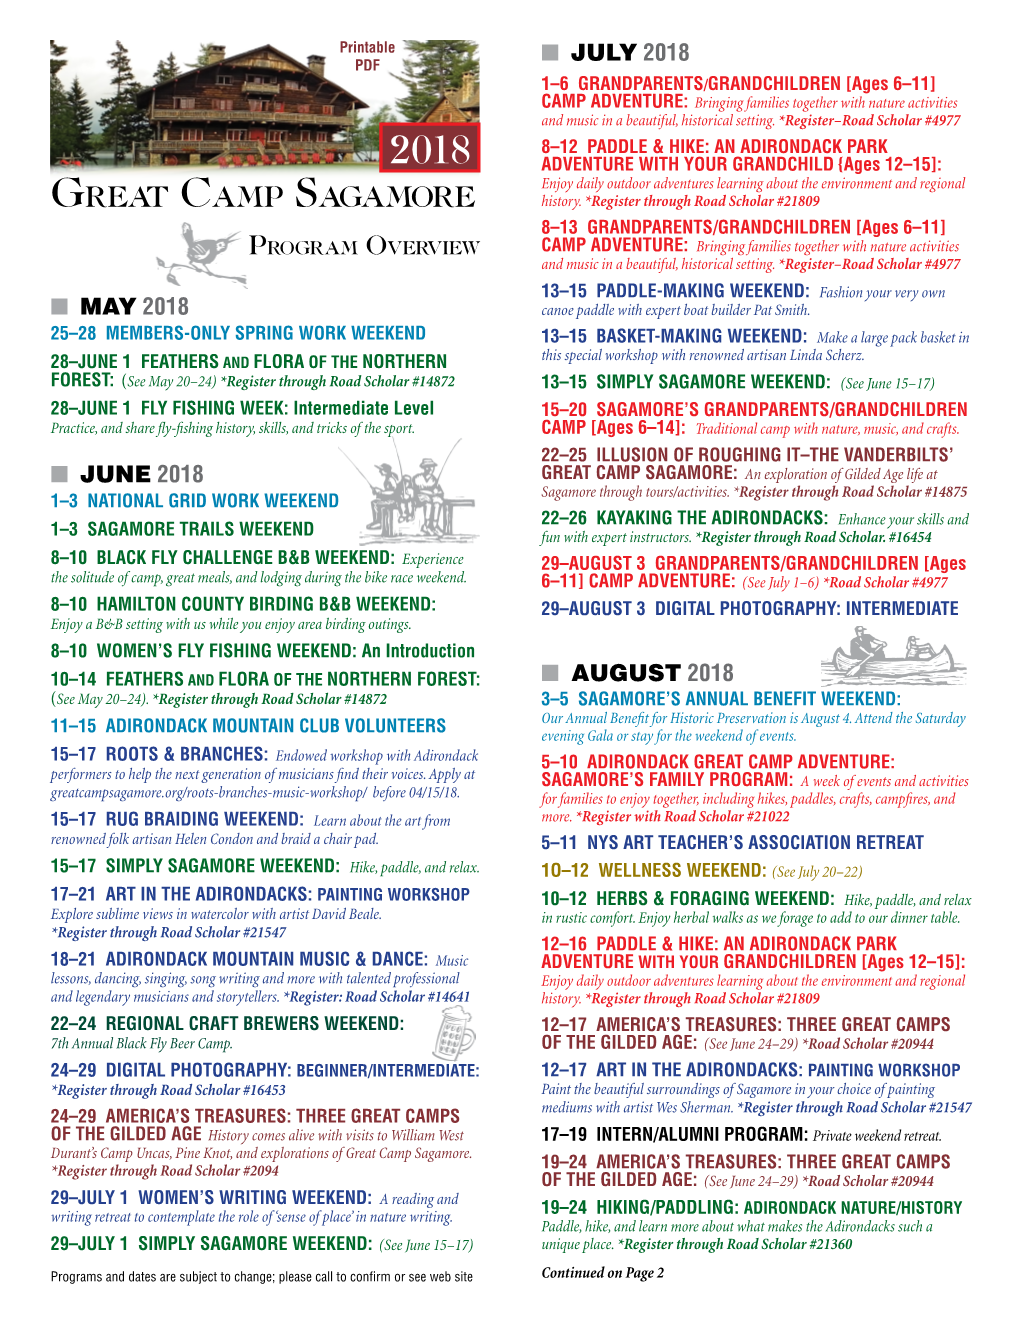 Great Camp Sagamore History